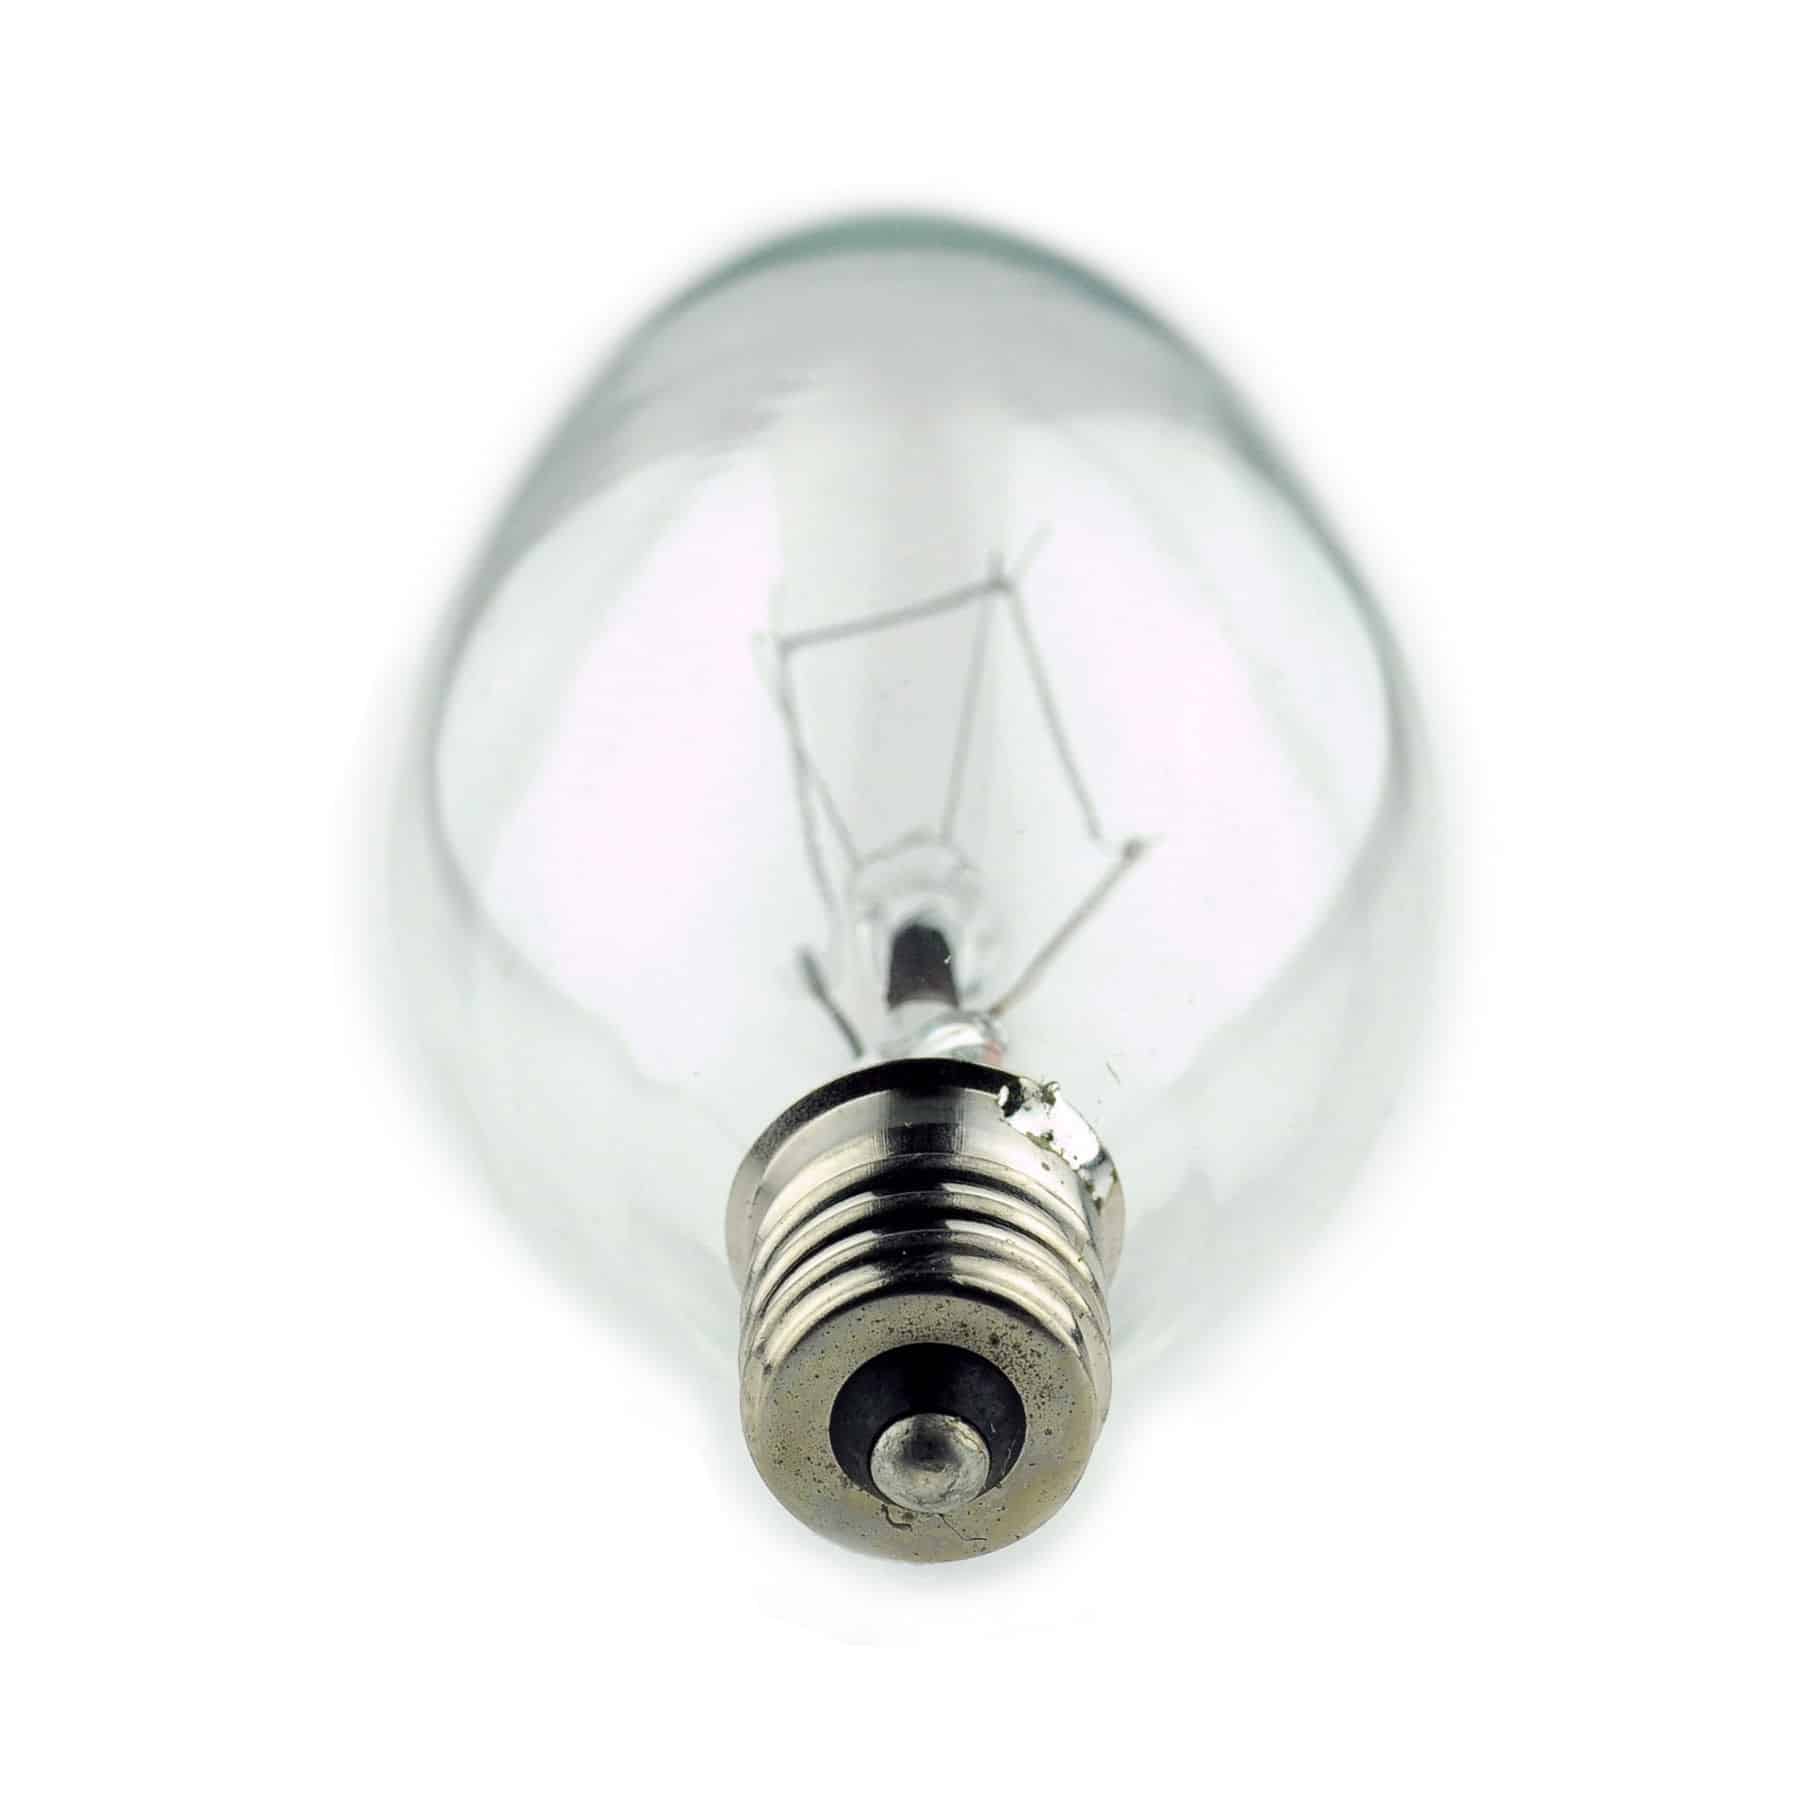 LED Candelabra Light Bulbs 40 Watt Equivalent Warm White LED Chandelier Bulbs Pack of 4 Albrillo E12 Bulb Decorative Candle Base E12 Non-Dimmable 